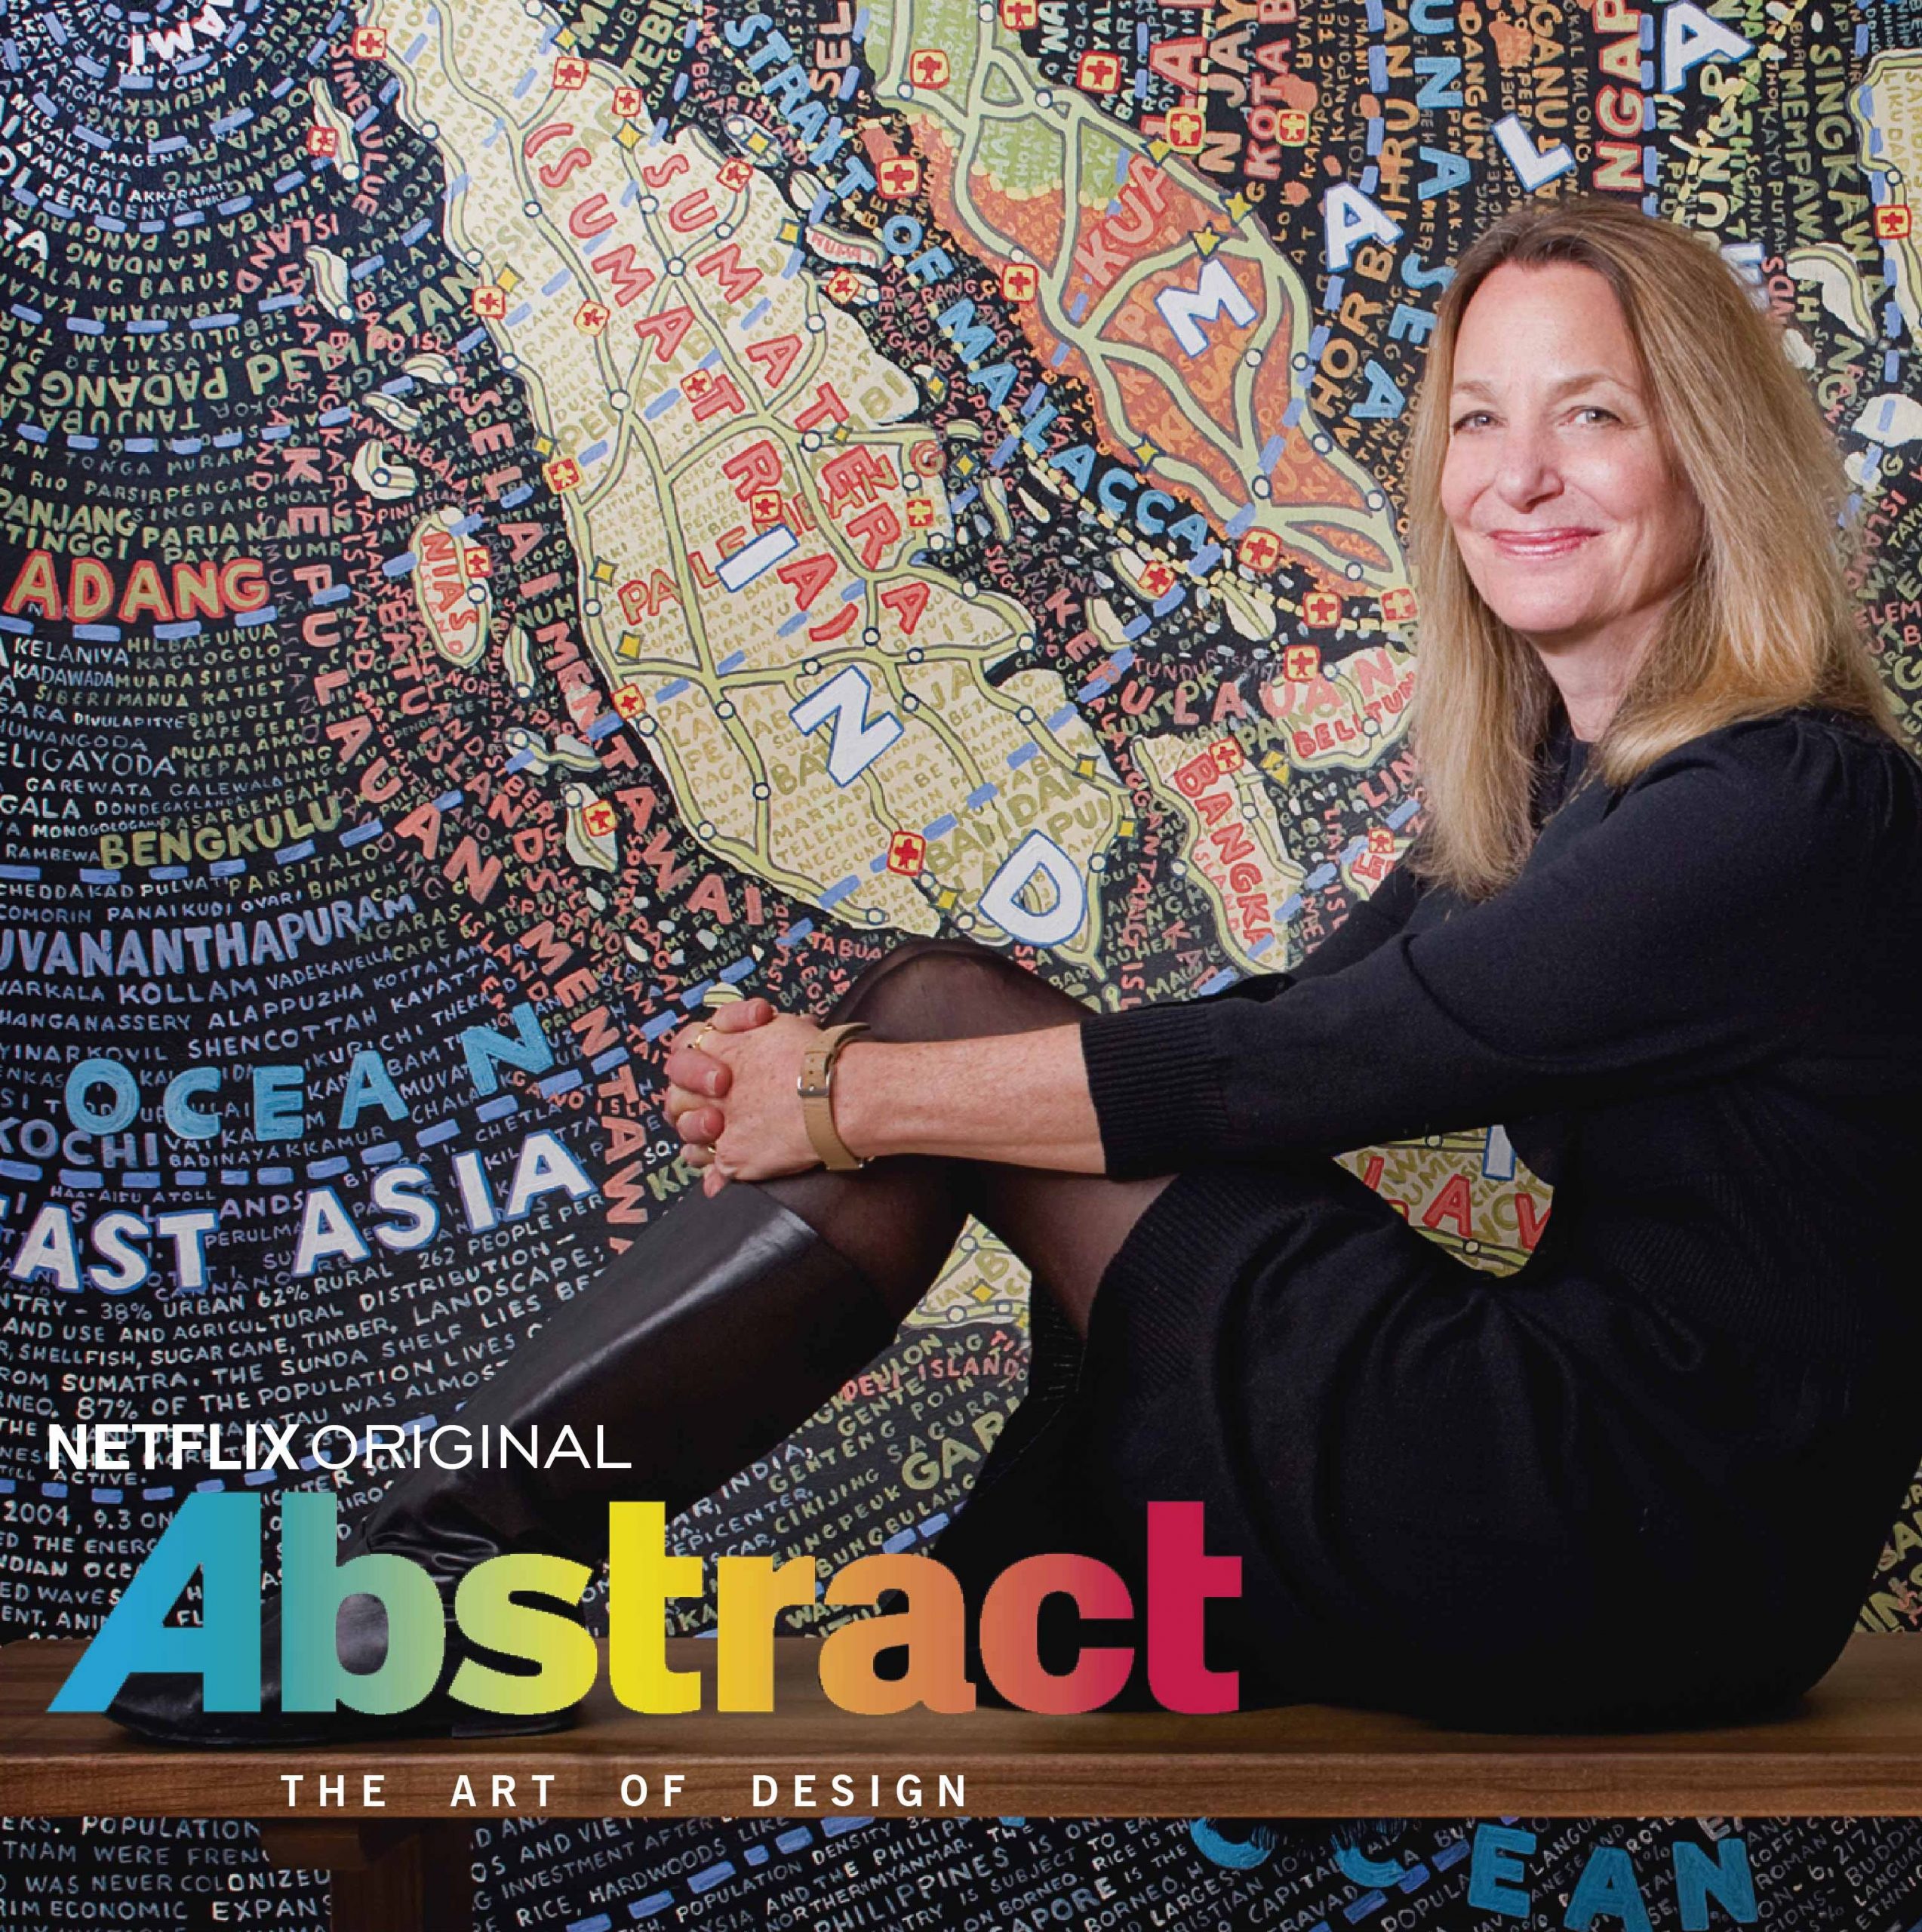 Abstract The Art of Design por Netflix a designer gráfica Paula Scher